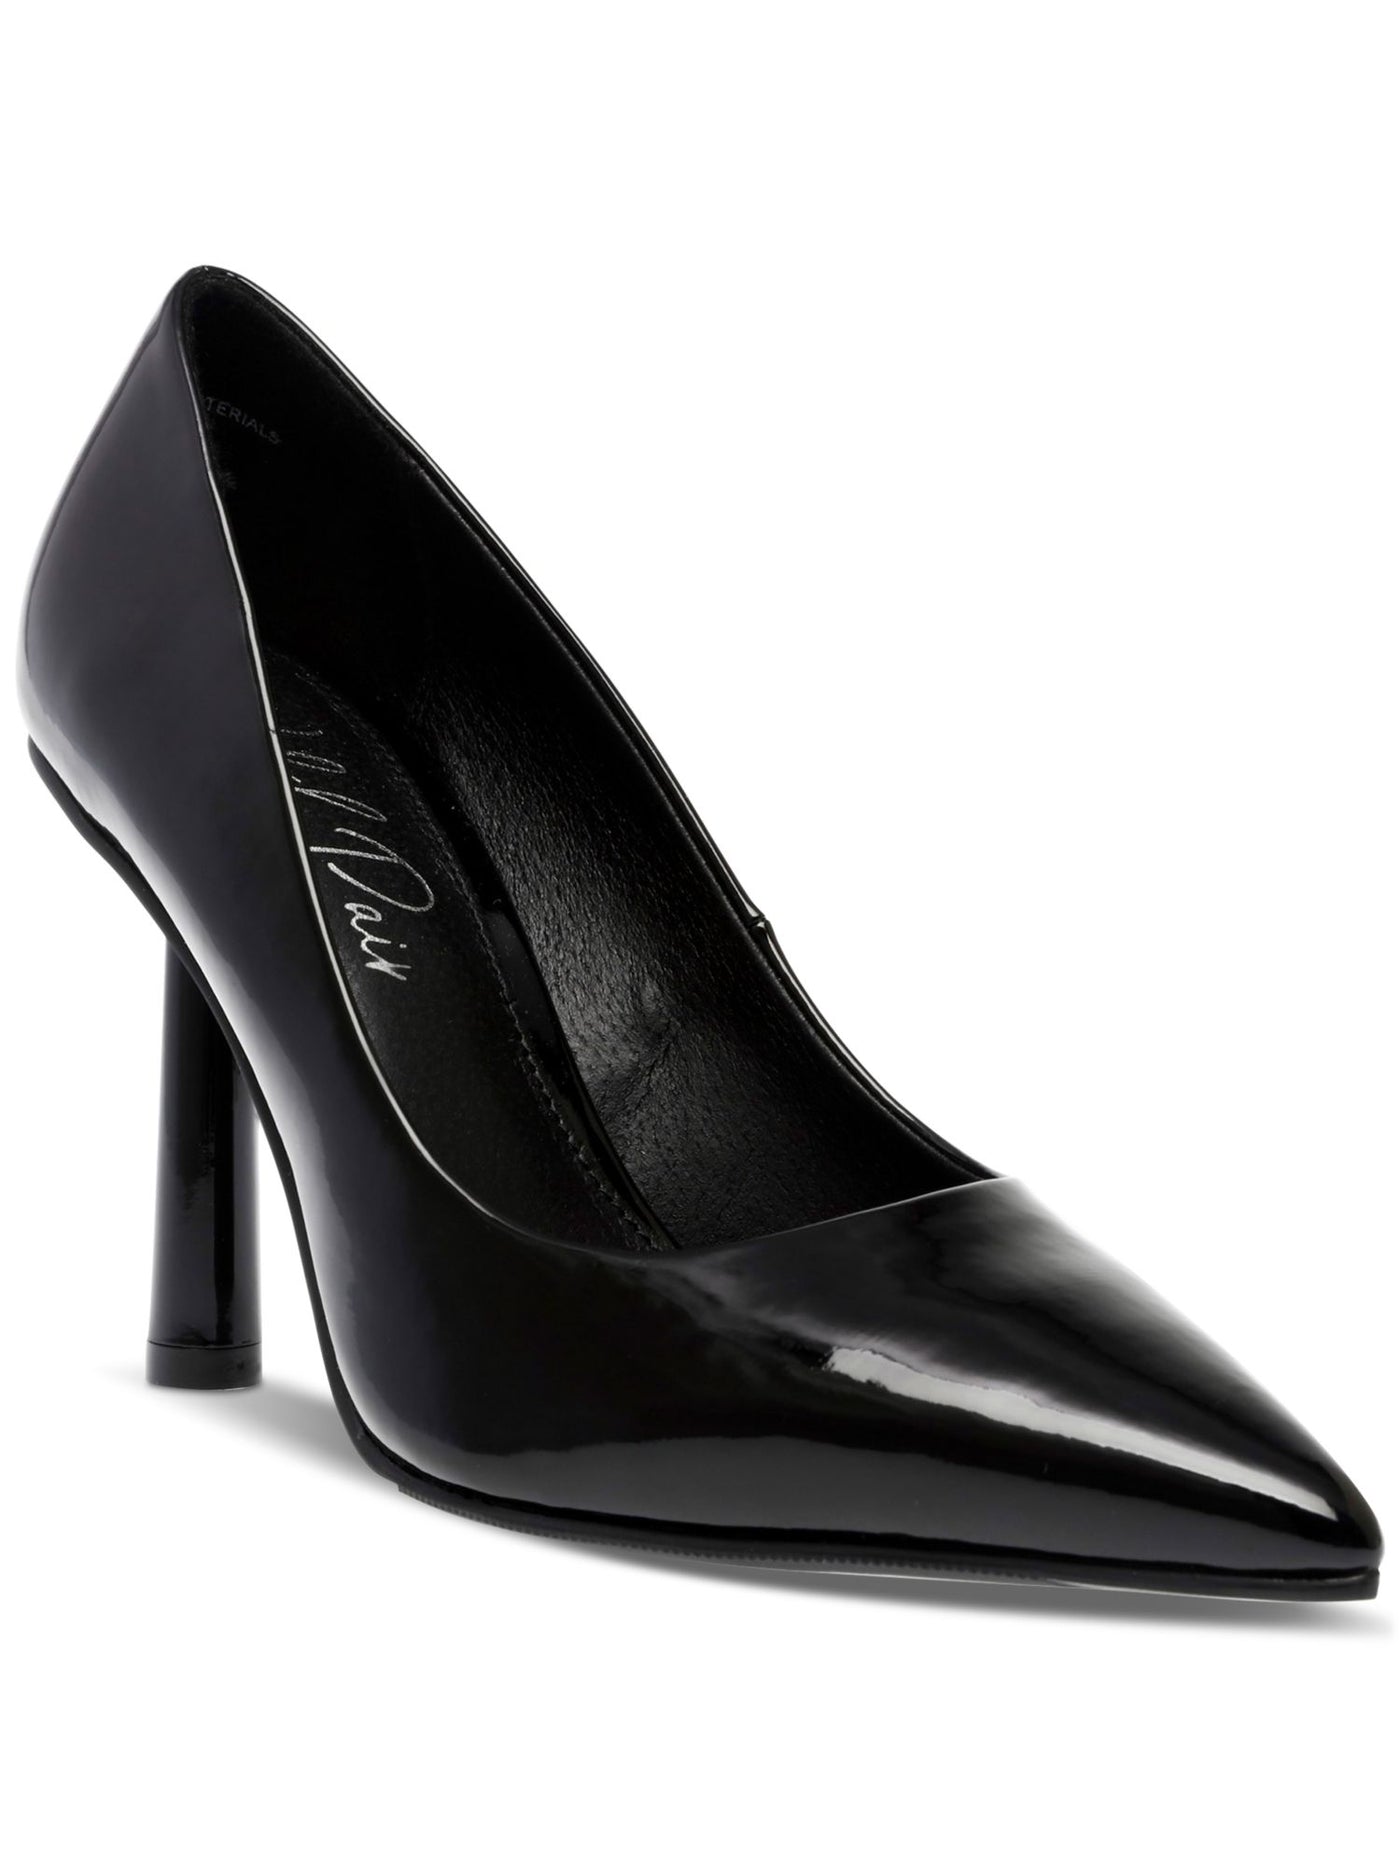 WILD PAIR Womens Black Slip Resistant Comfort Taraa Pointed Toe Stiletto Slip On Pumps Shoes 9 M